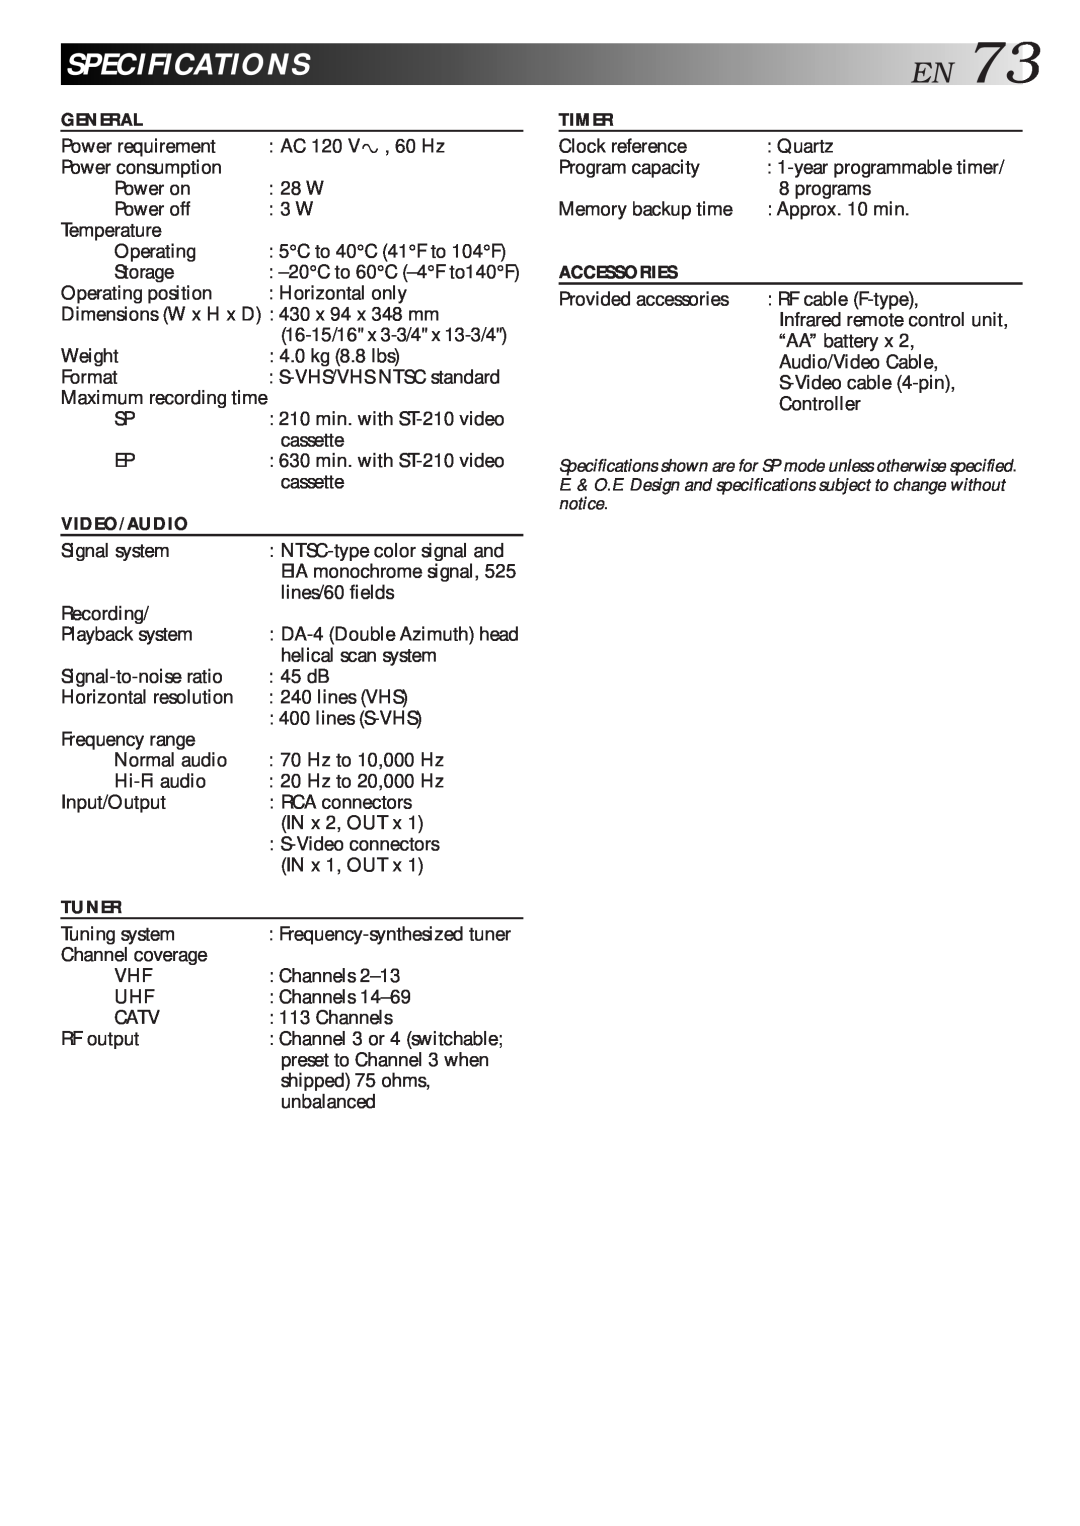 JVC HR-S7500U manual Specifications, EN73 